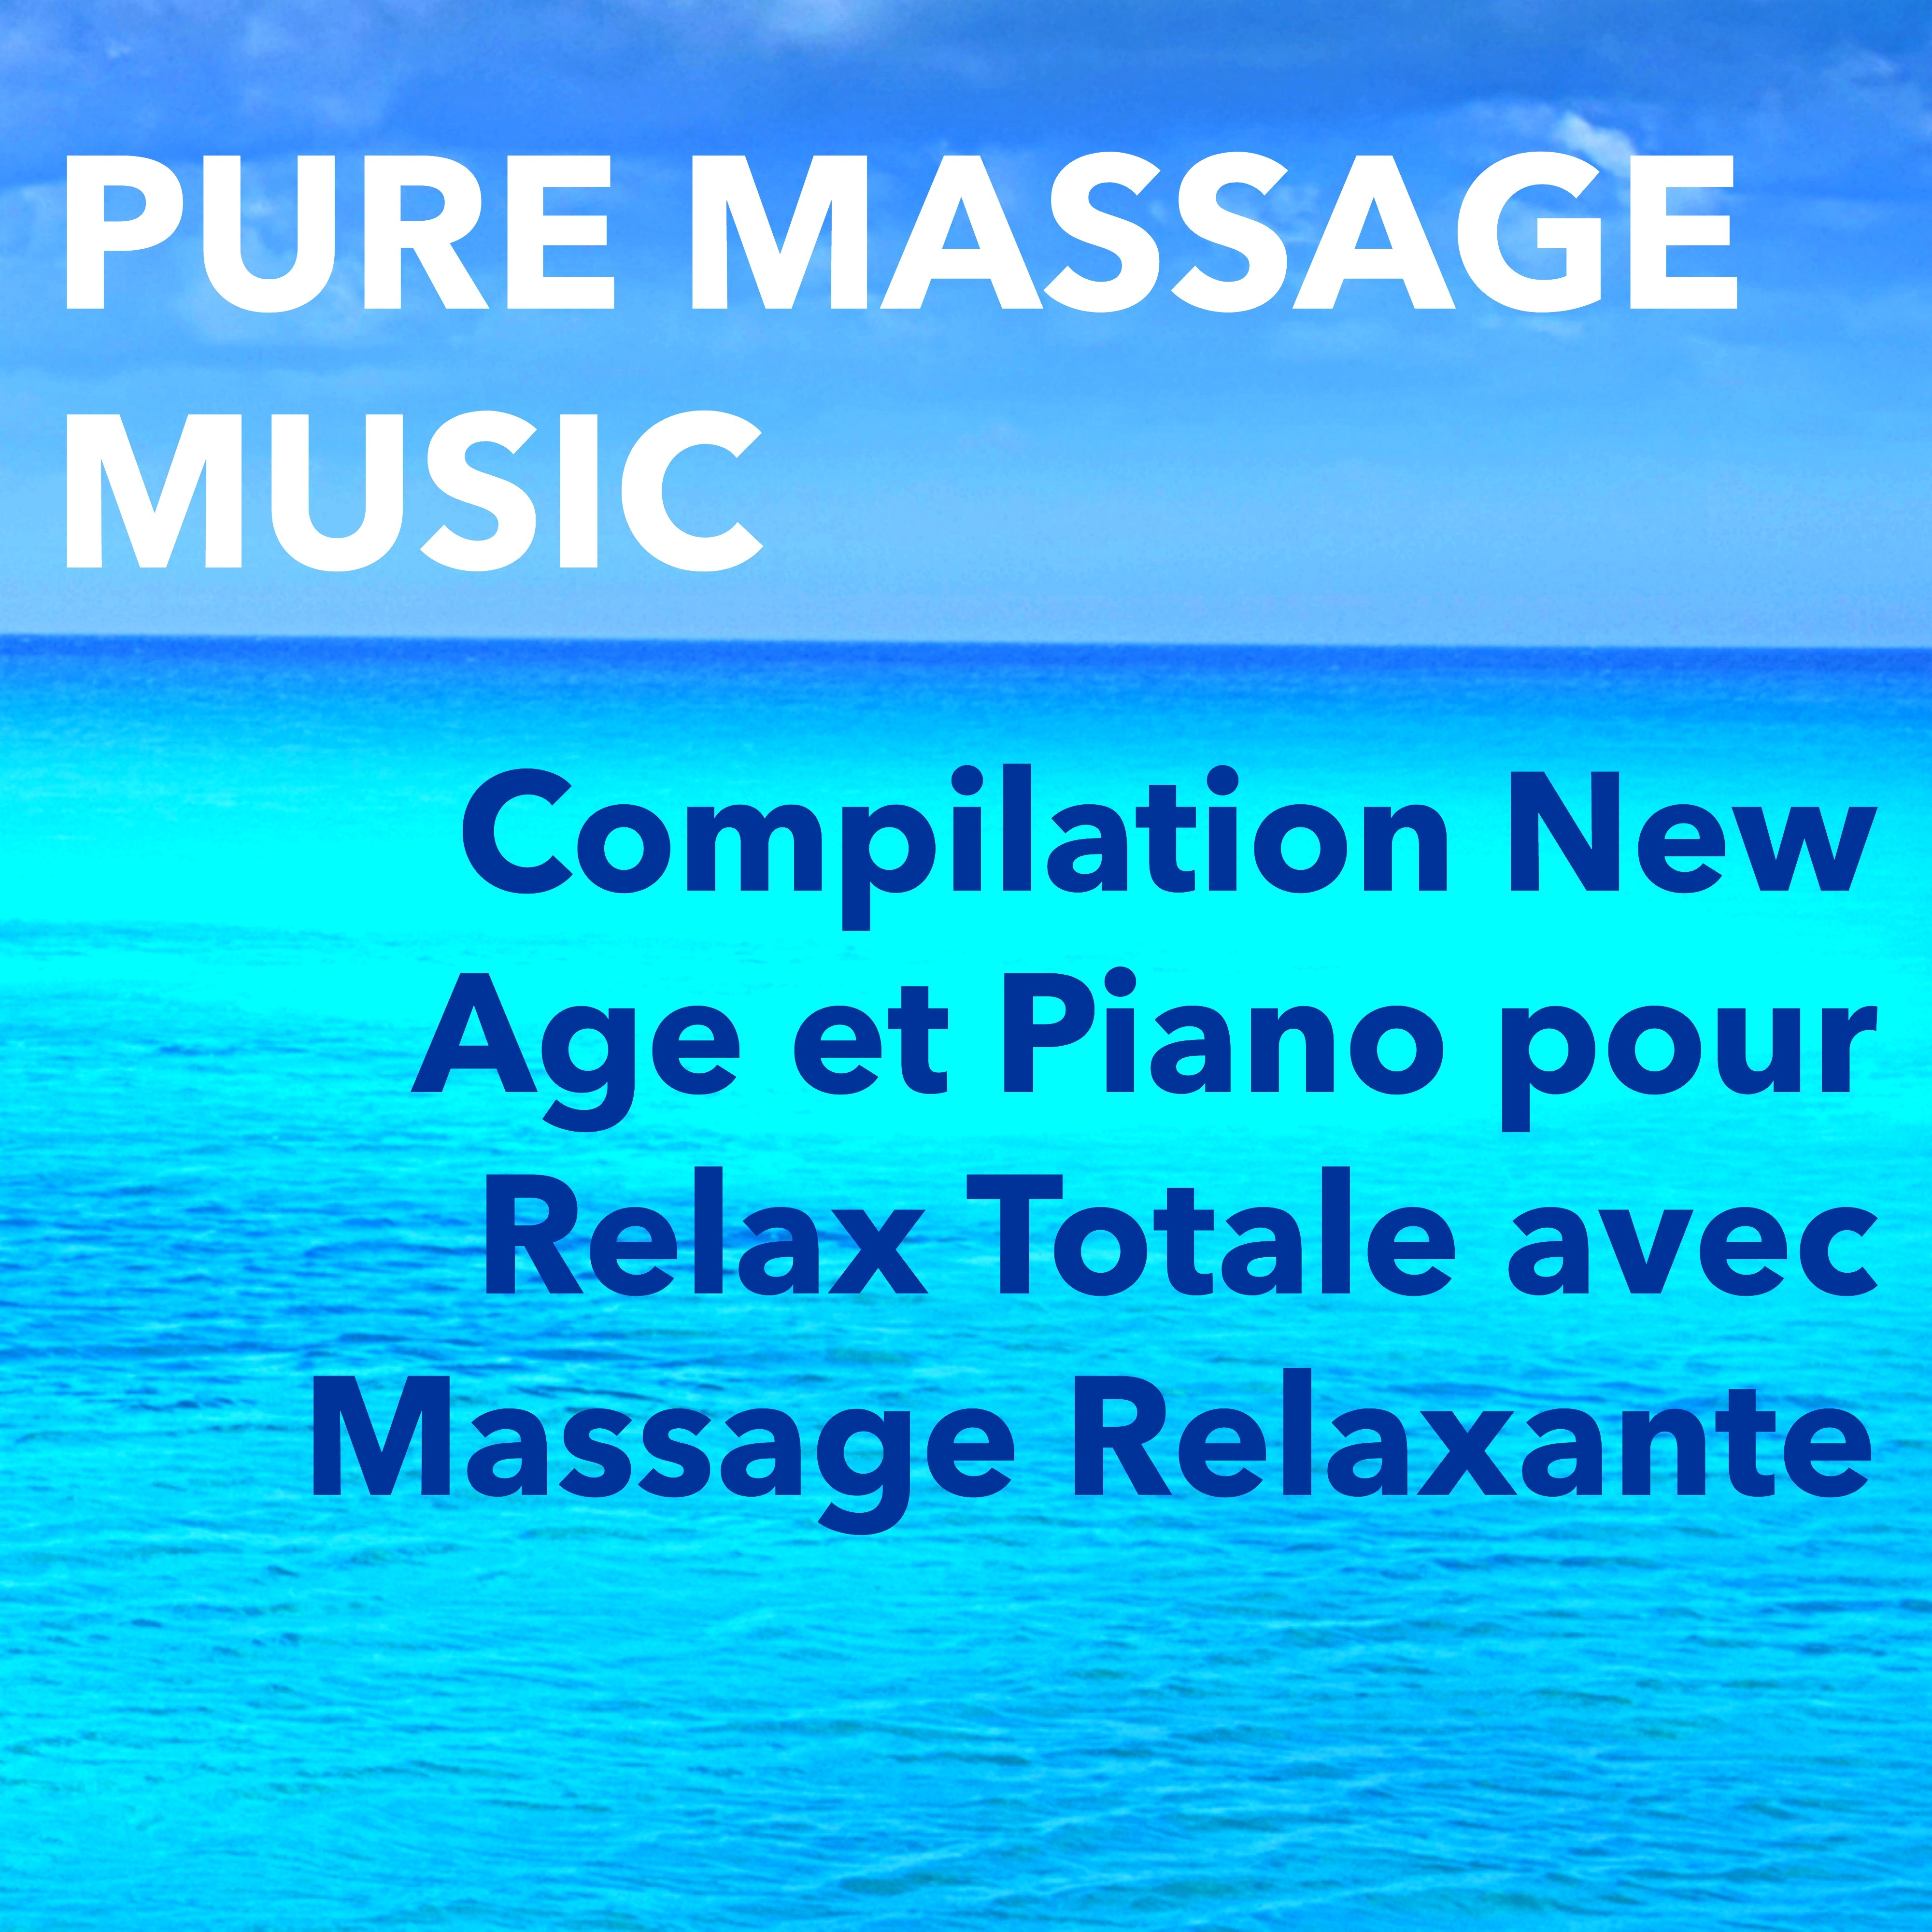 Pure Massage Music  Compilation New Age et Piano pour Relax Totale avec Massage Relaxante